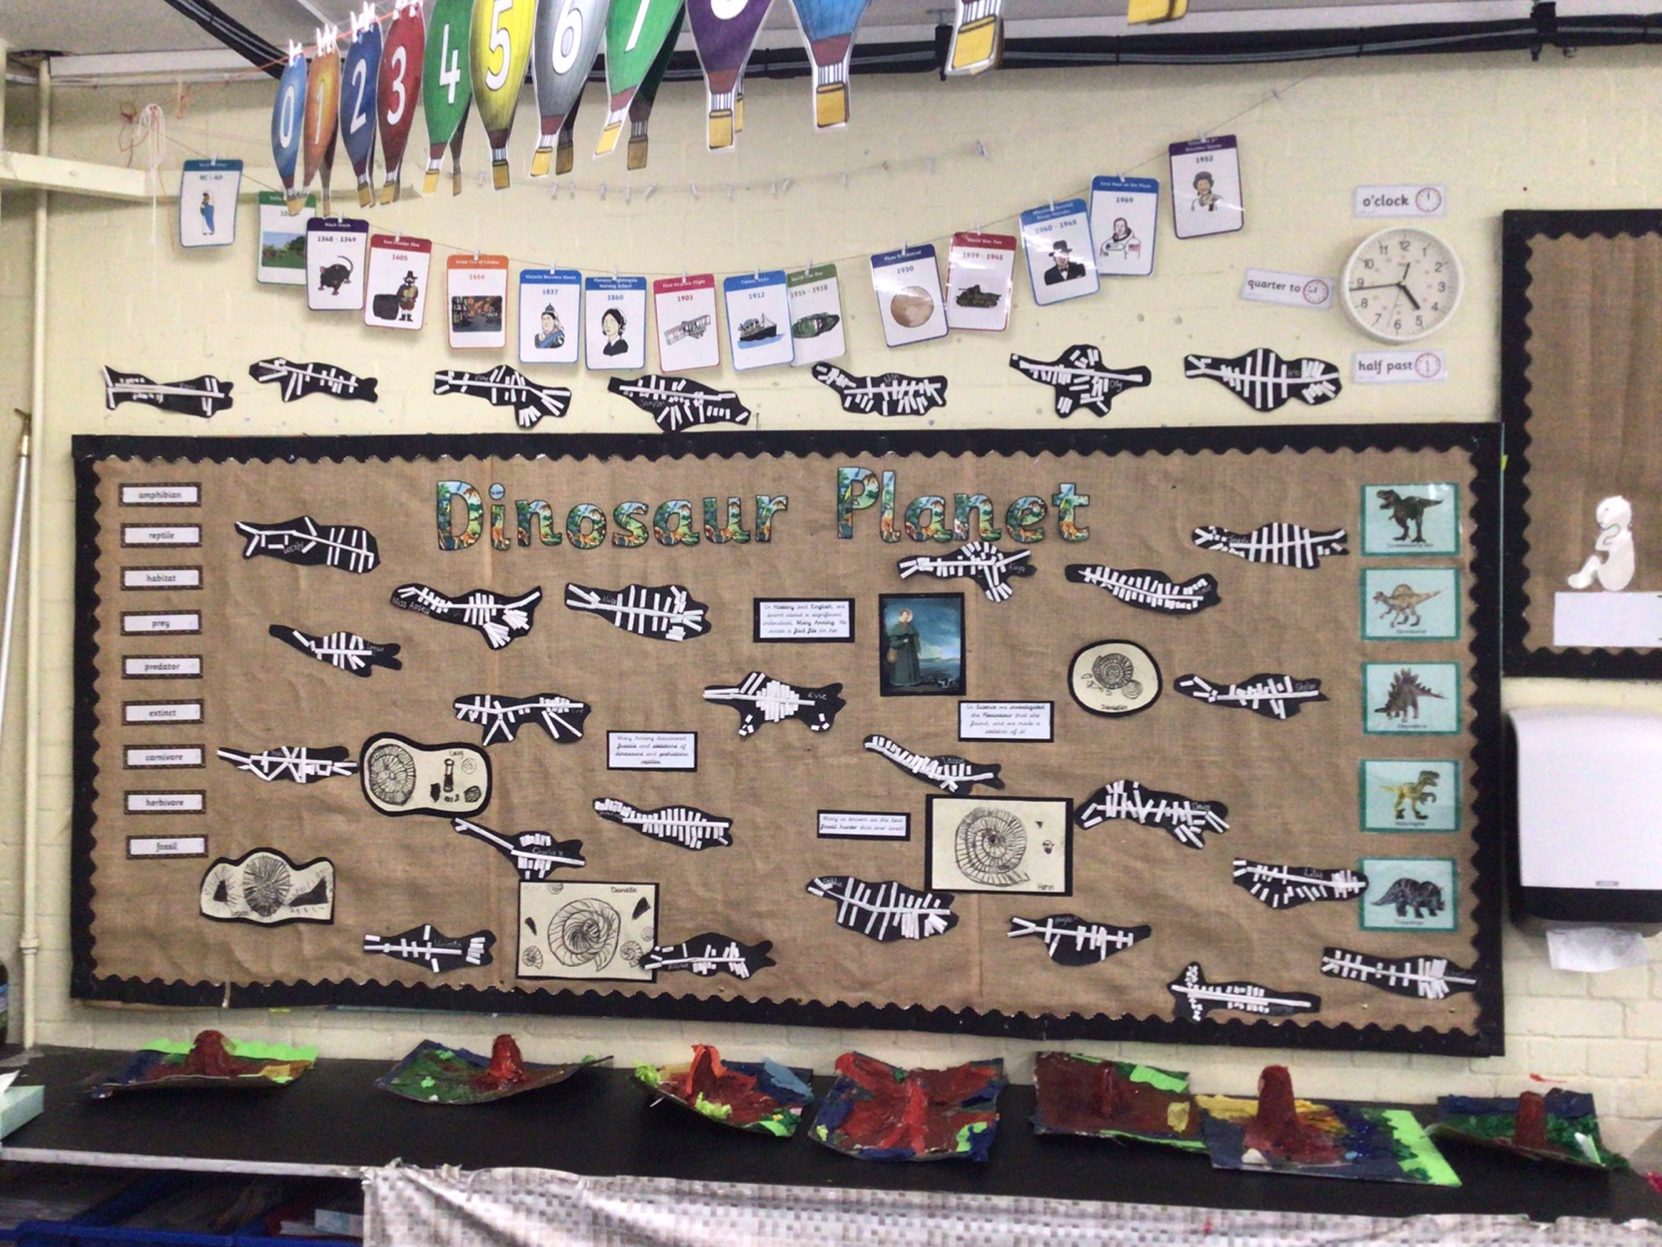 dinosaur planet display board in year 1 classroom